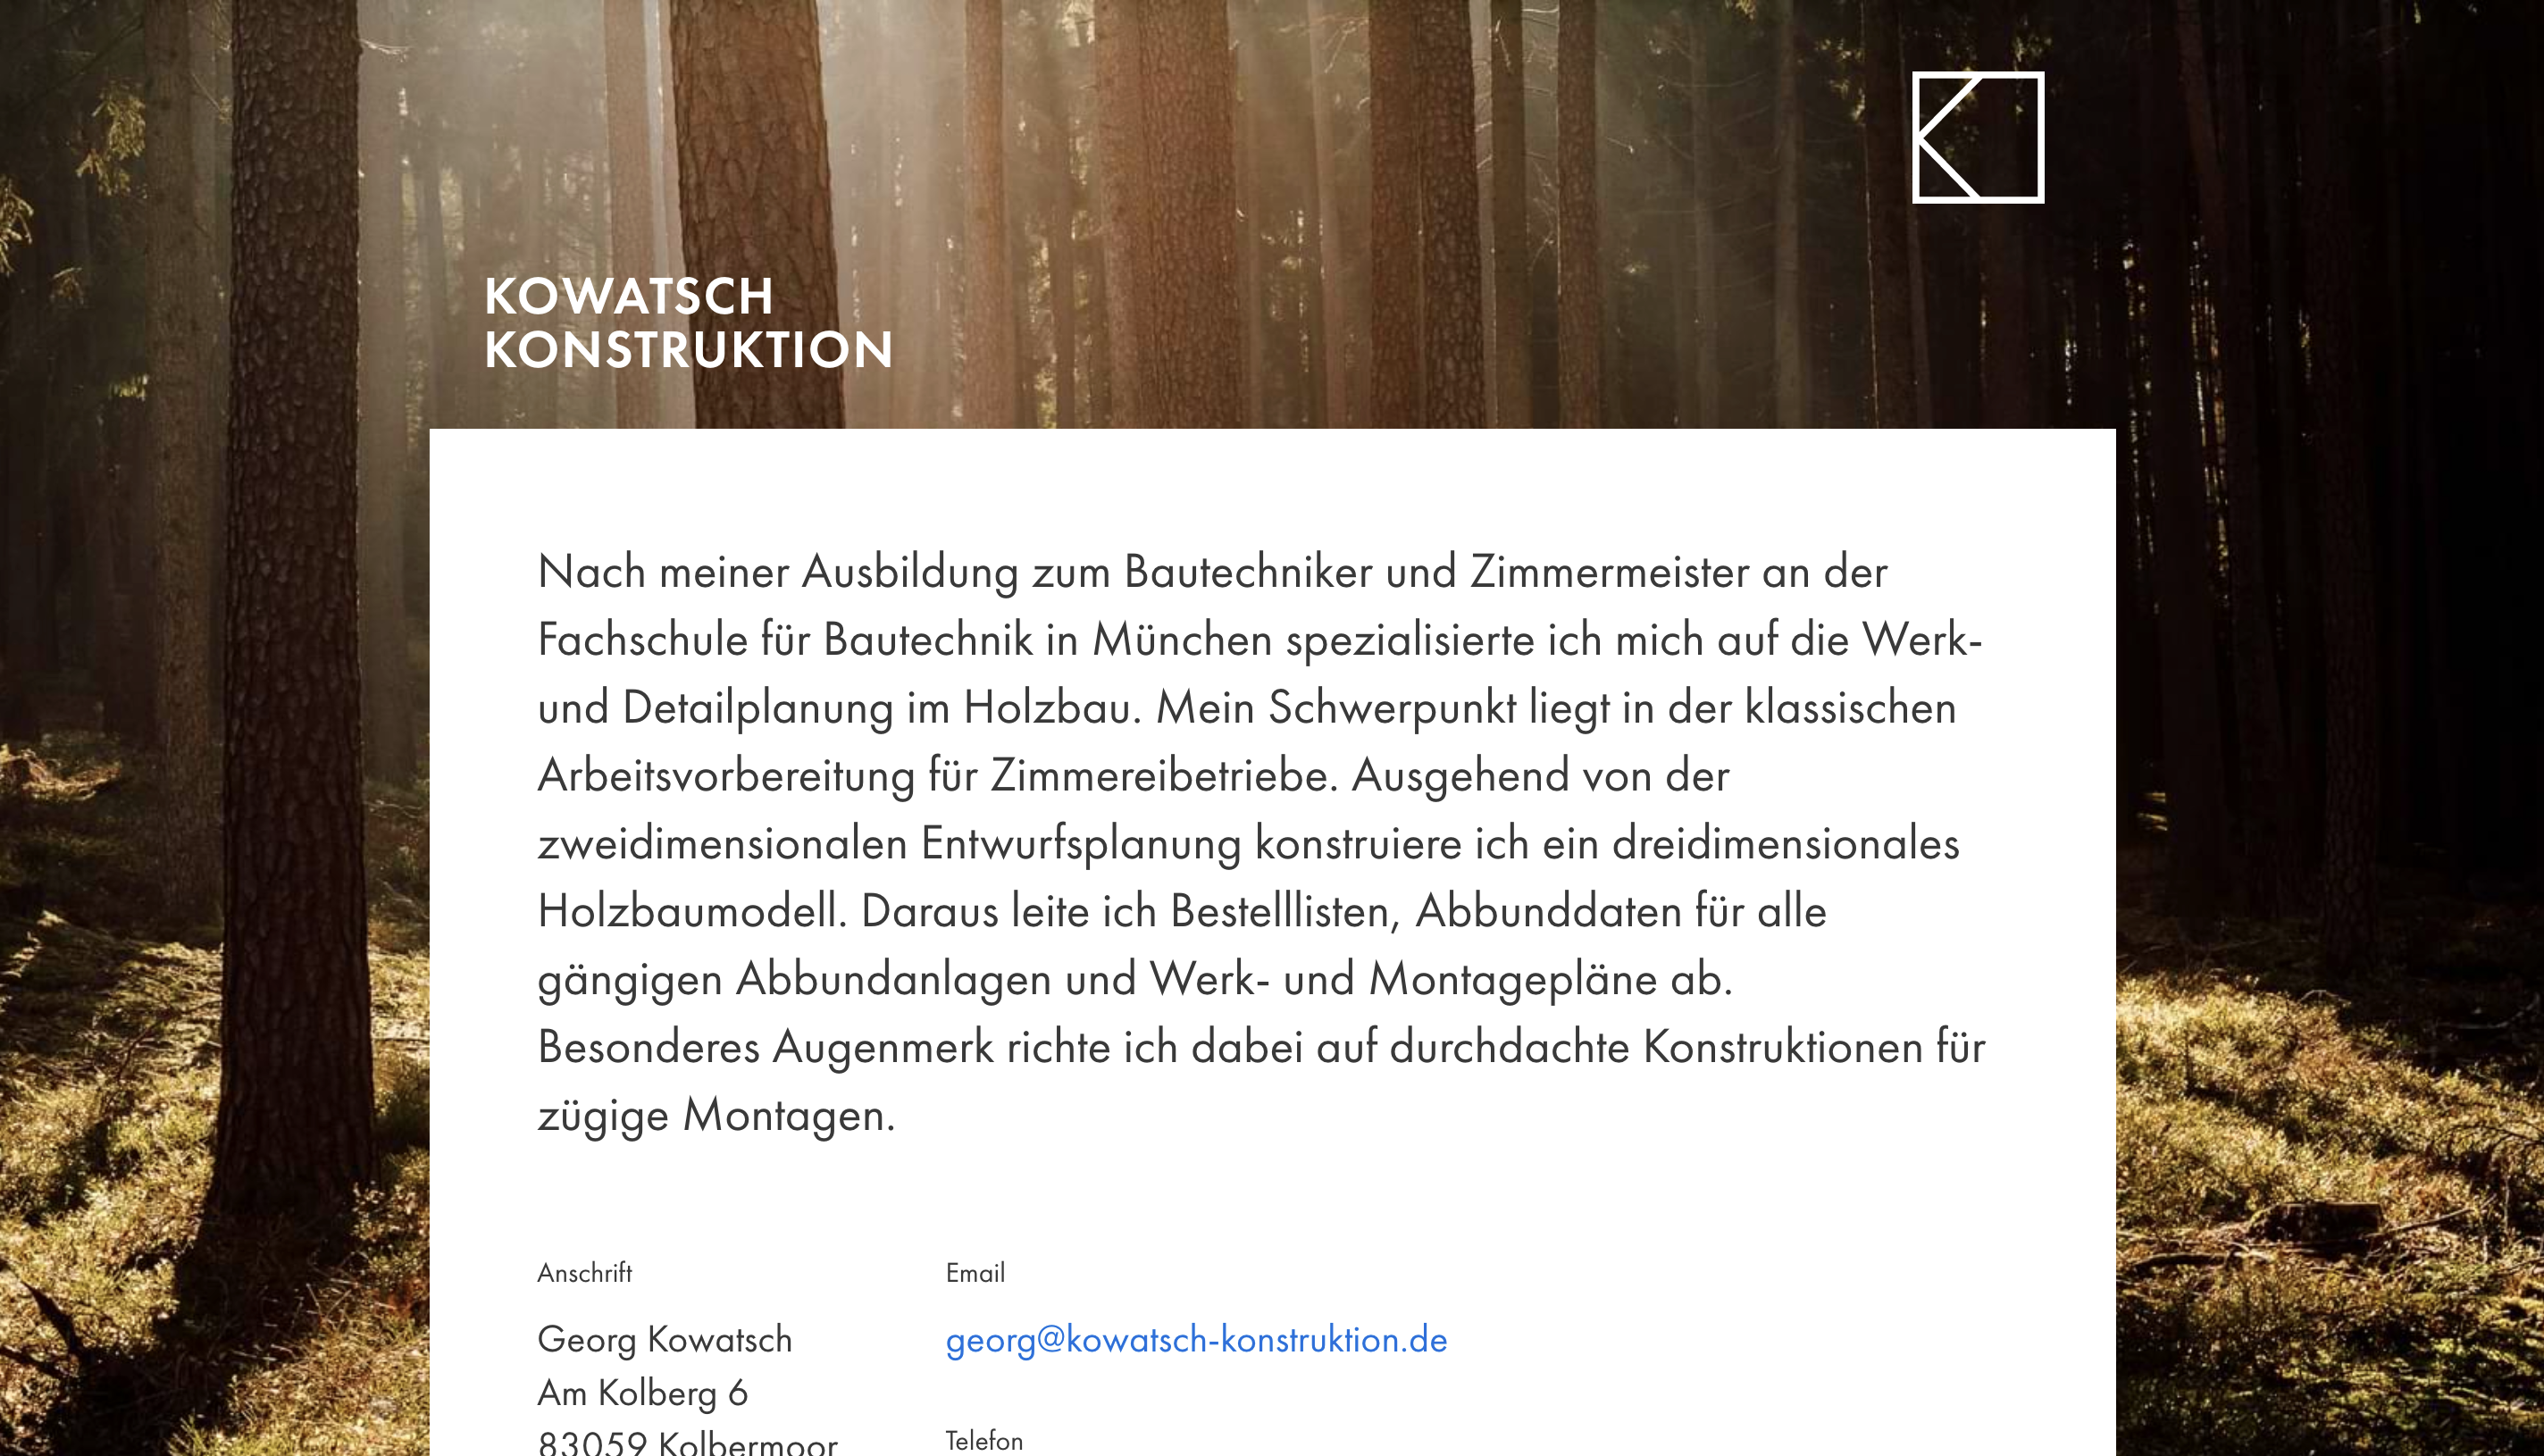 Image of website for Kowatsch Konstruktion